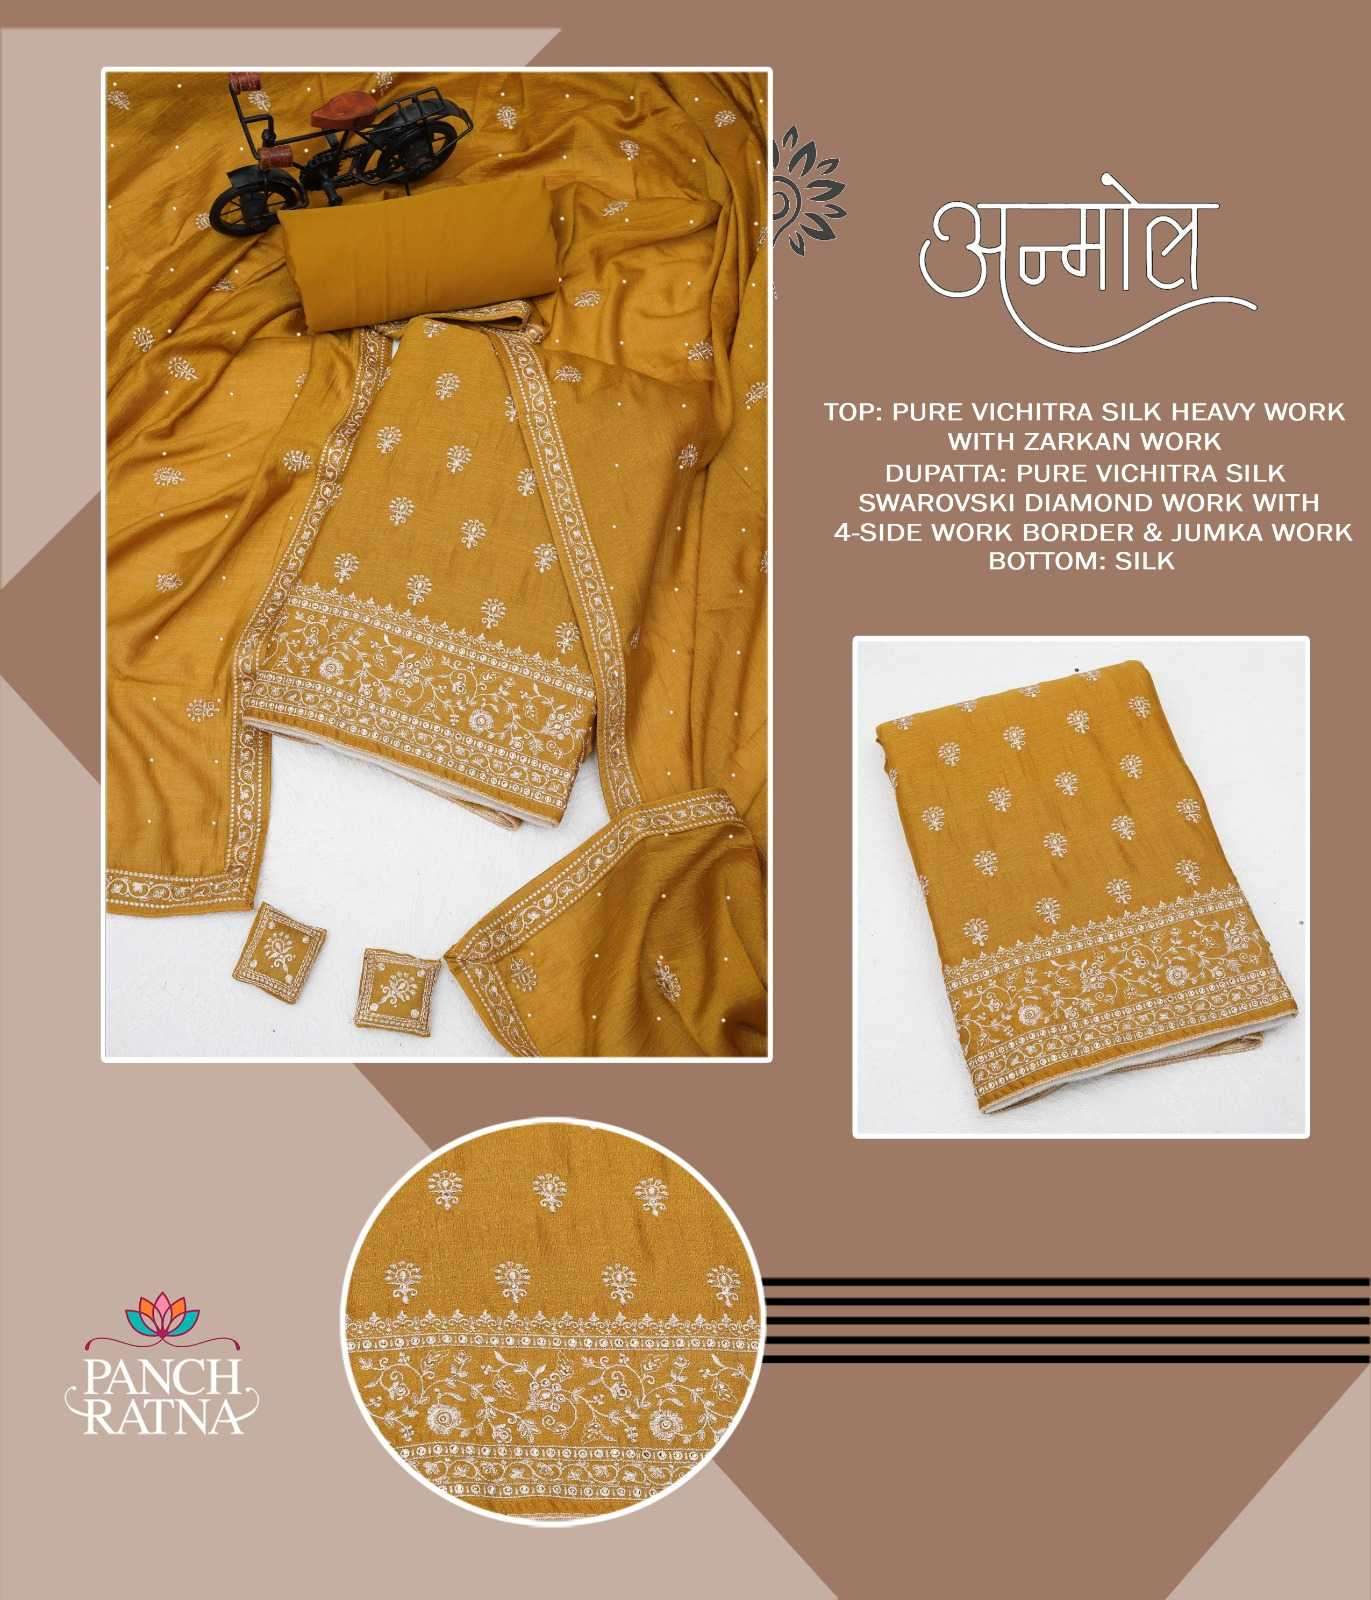 panch ratna anmol Pure Vichitra Silk Heavy Work suit